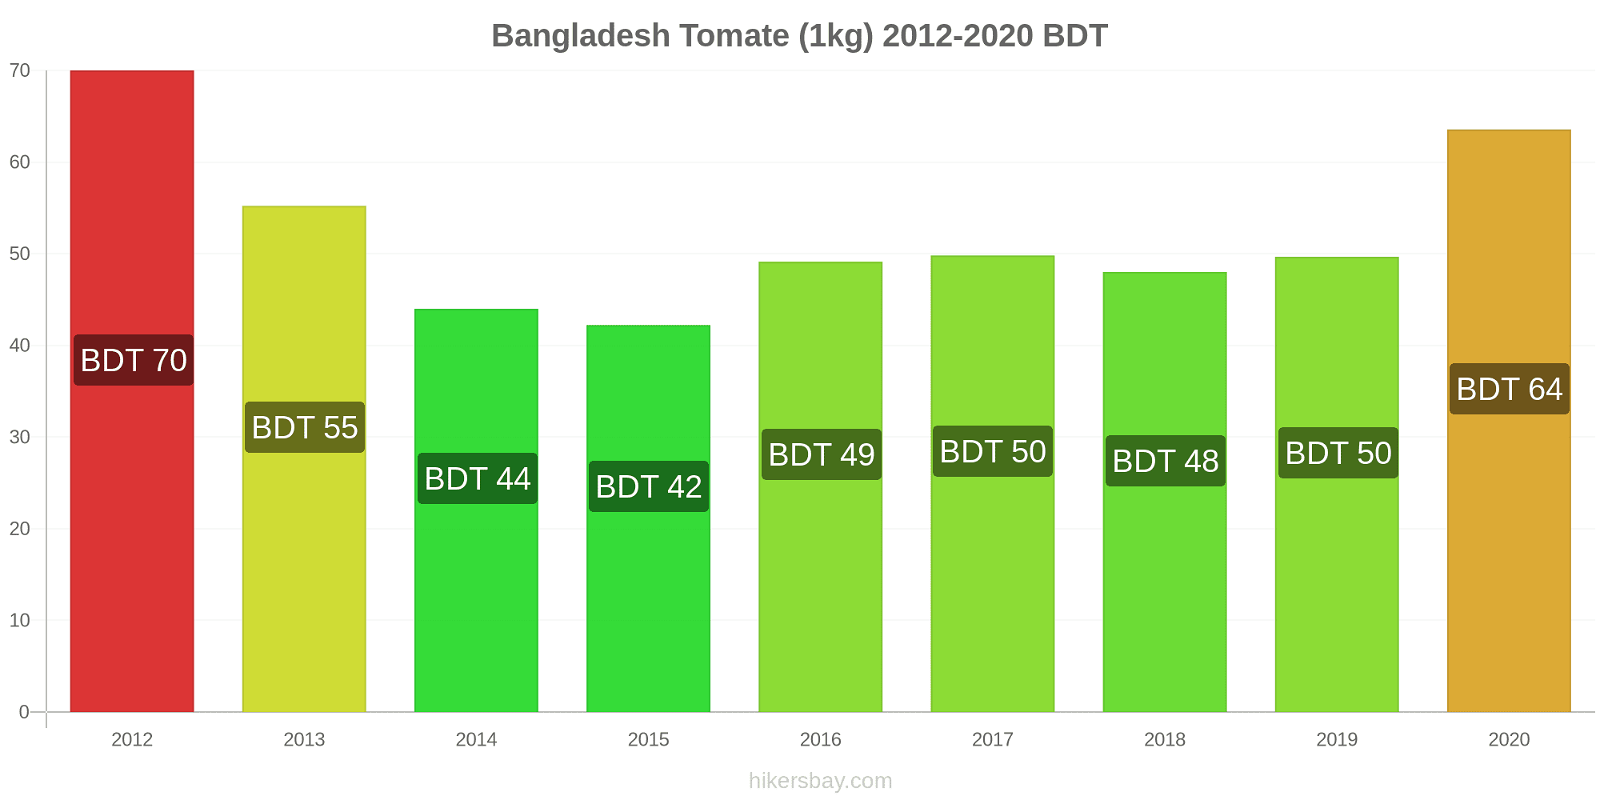 Bangladesh changements de prix Tomate (1kg) hikersbay.com